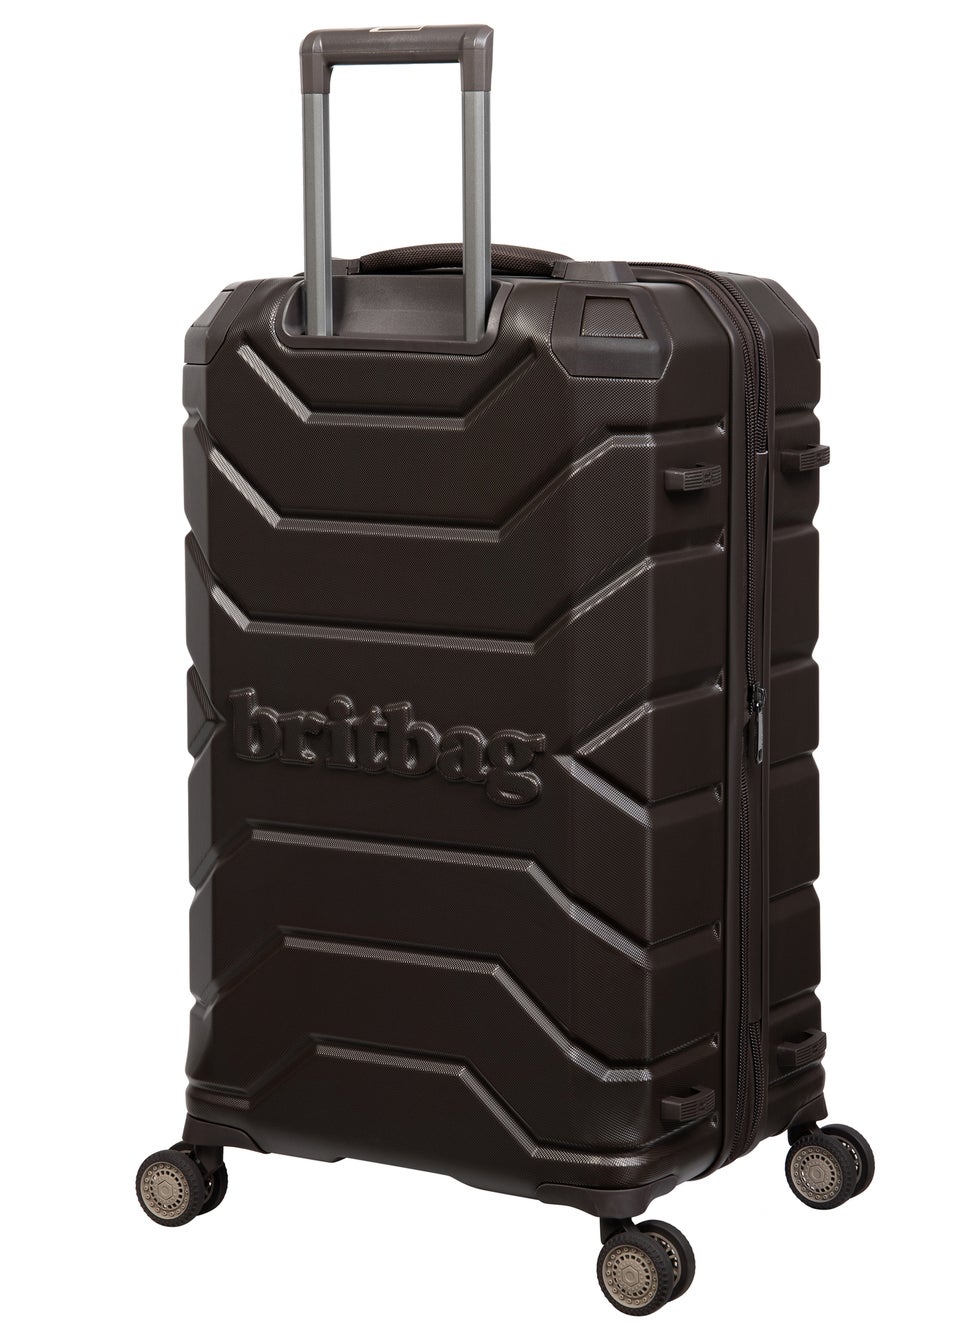 BritBag Galloway Brown Mulch Medium Suitcase with TSA Lock